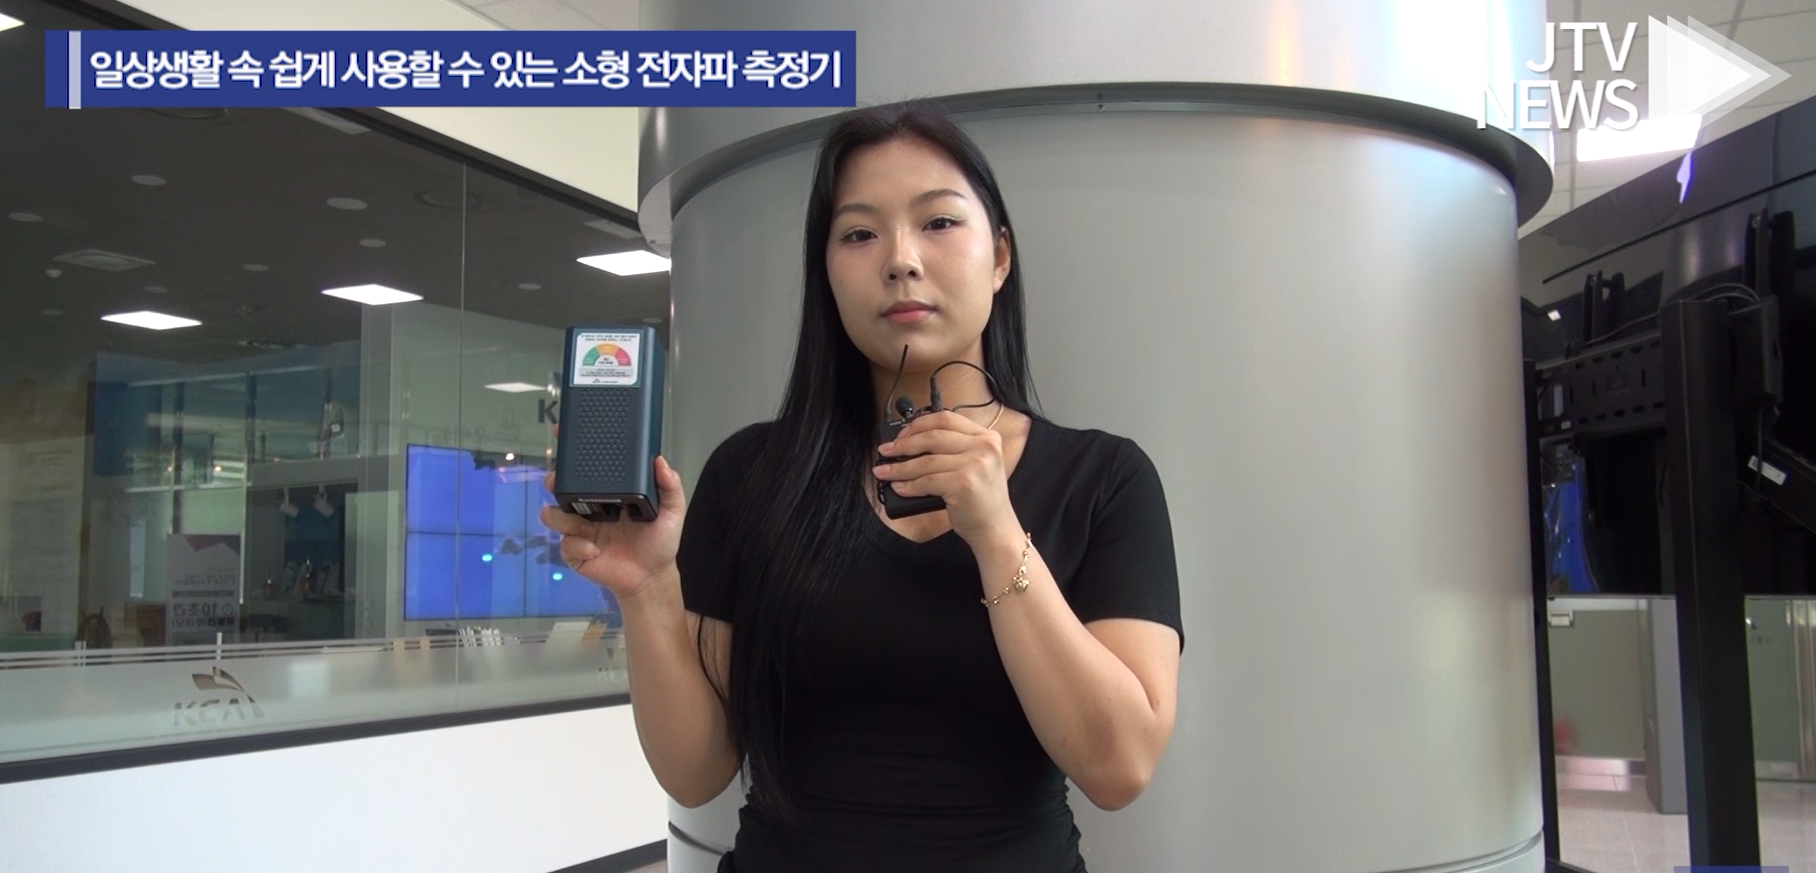 [JTV News] 소형 전자파 측정기 주목